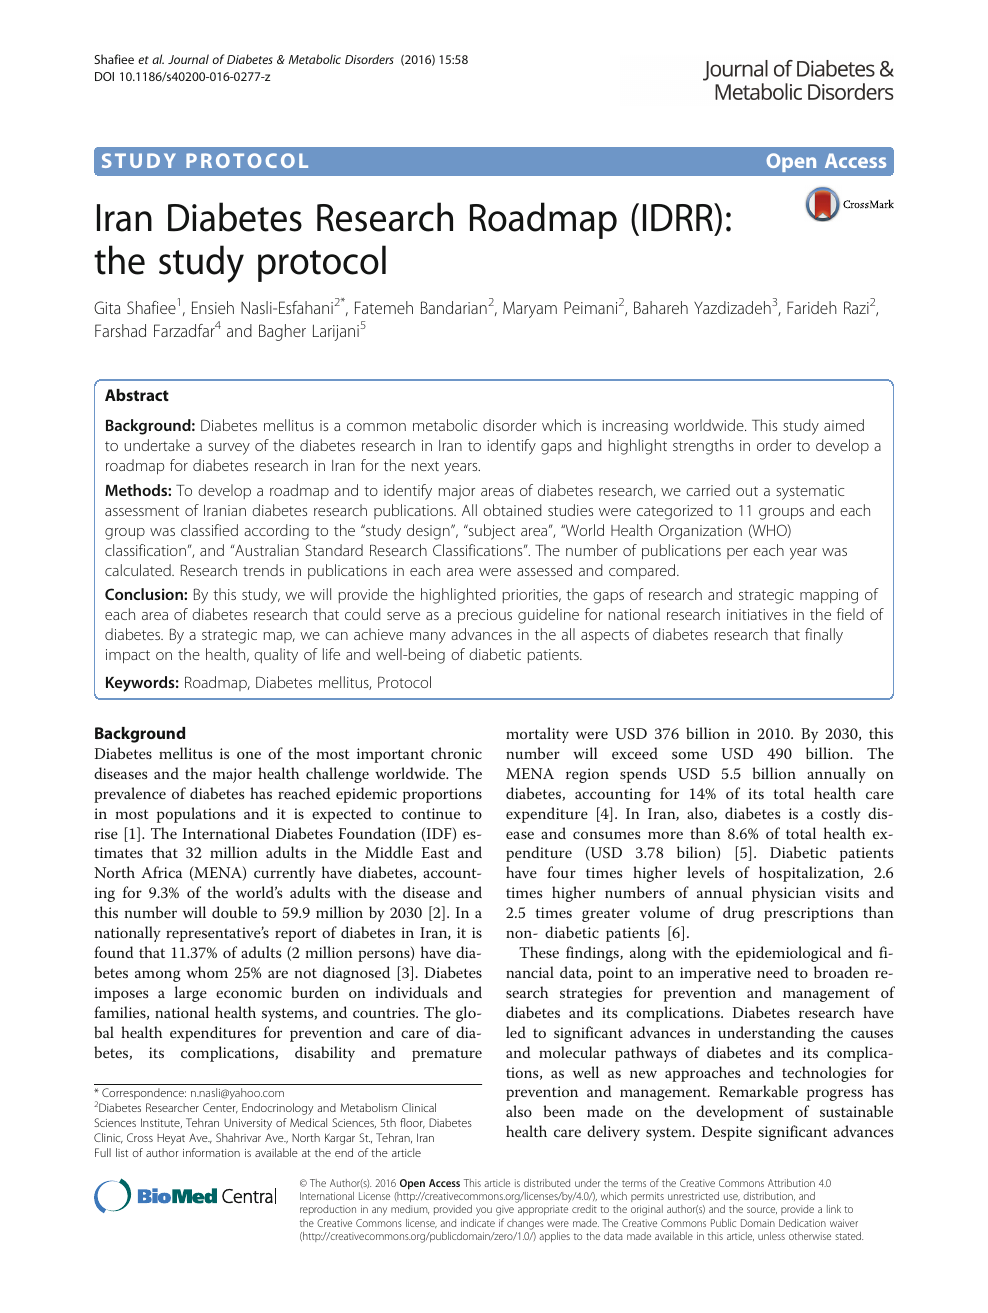 diabetes research open access